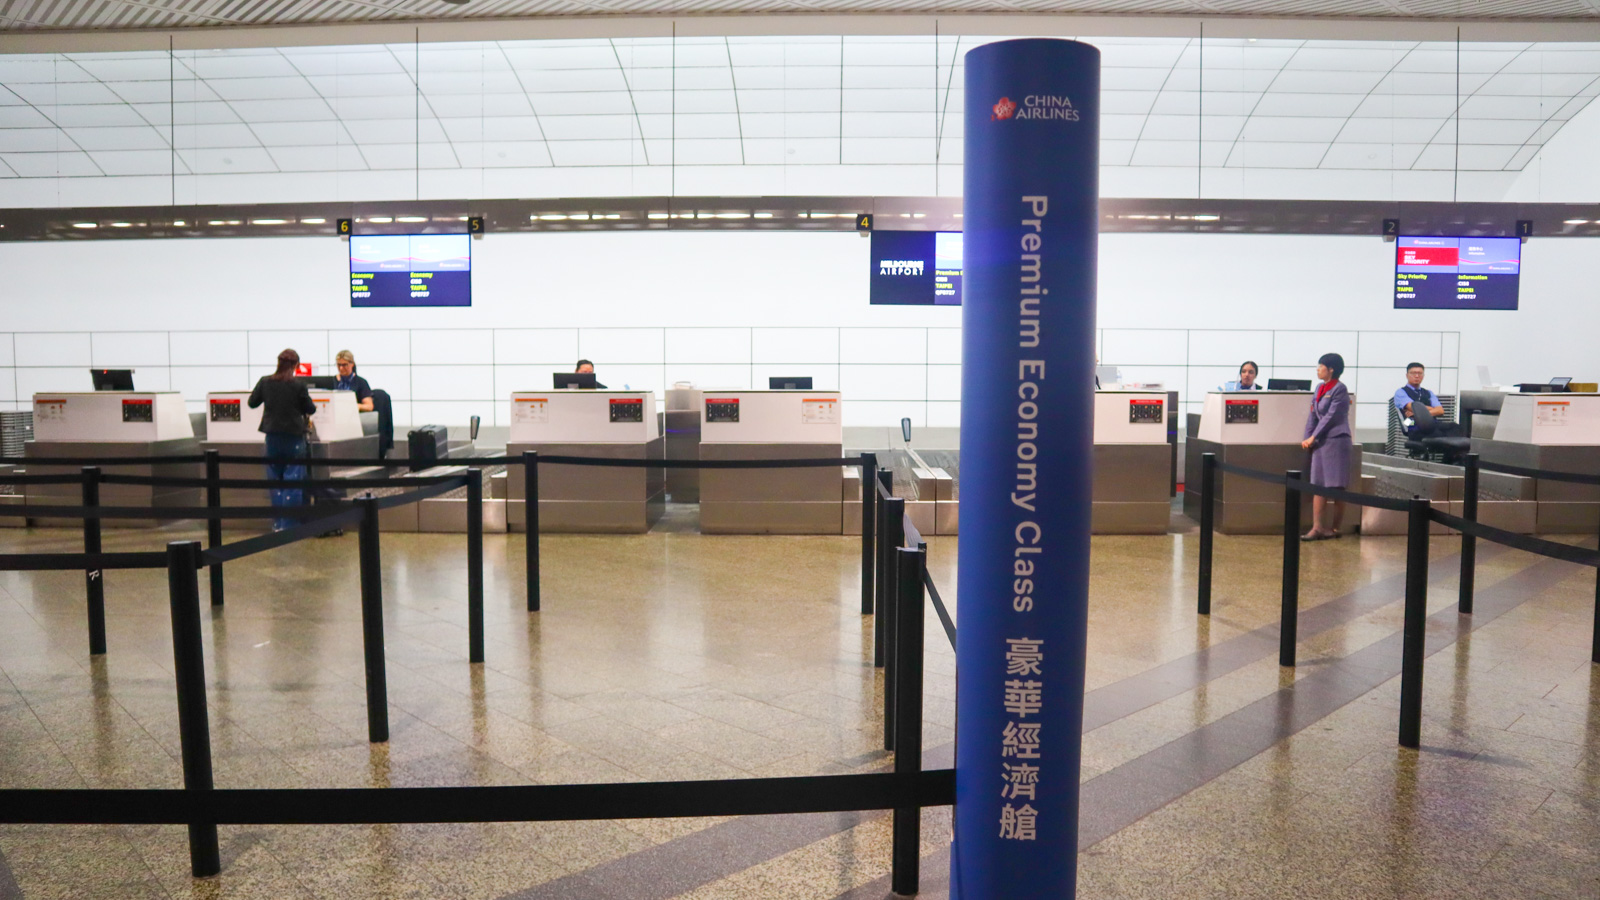 China Airlines Premium Economy check in, Melbourne Airport